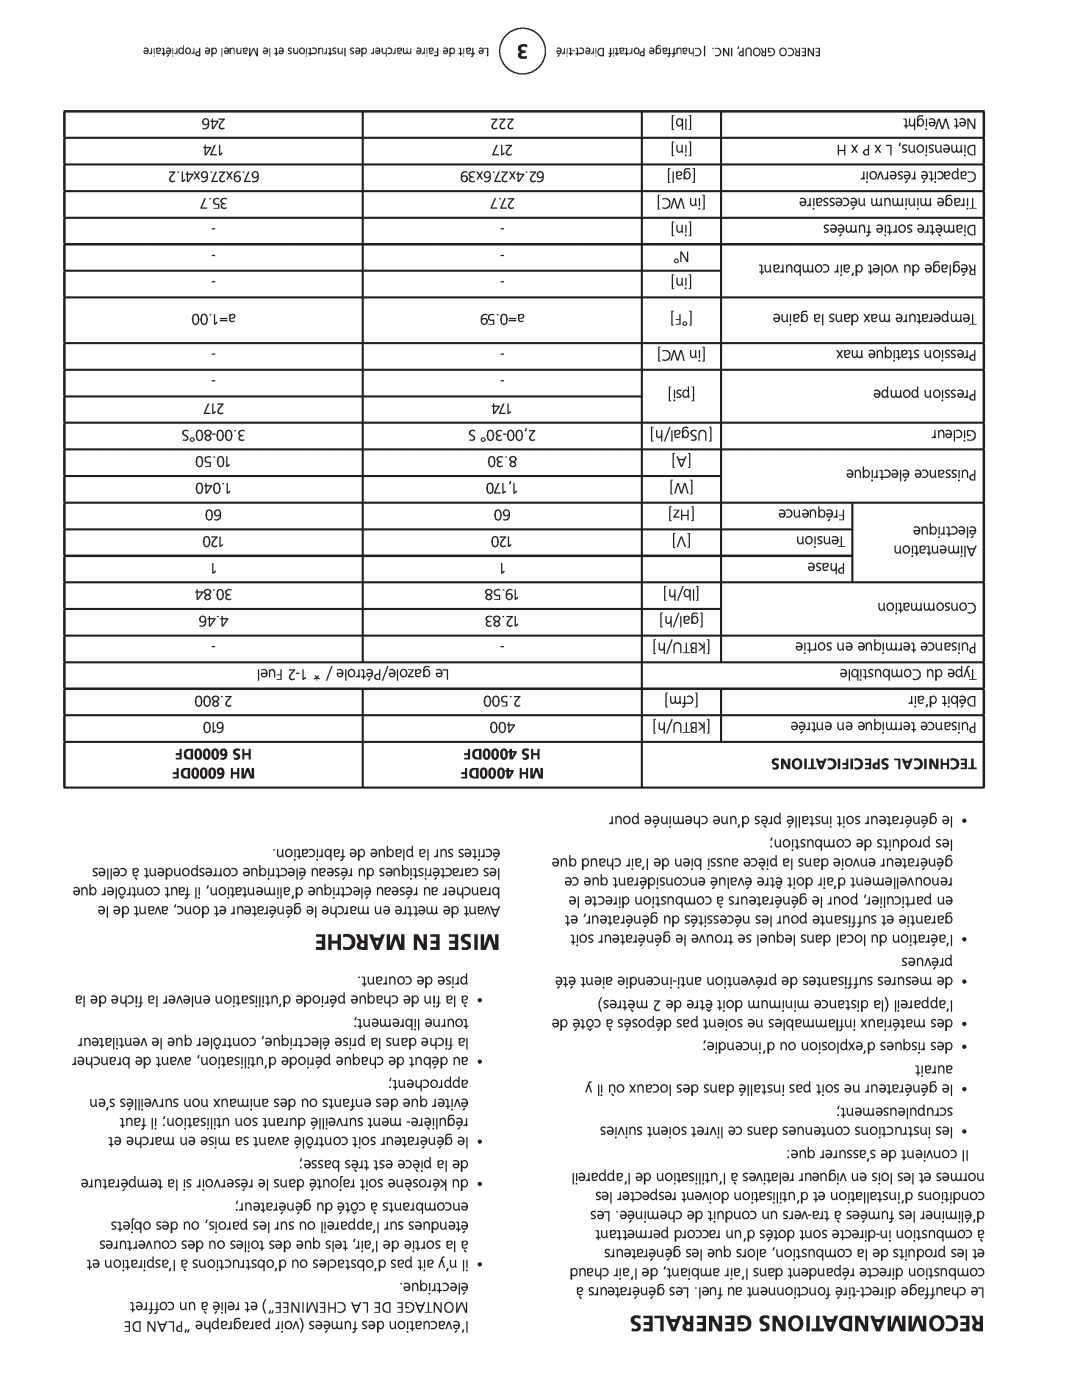 Enerco owner manual Marche En Mise, Generales Recommandations, 6000DF hs, 4000DF hs, 6000DF mh, 4000DF mh 